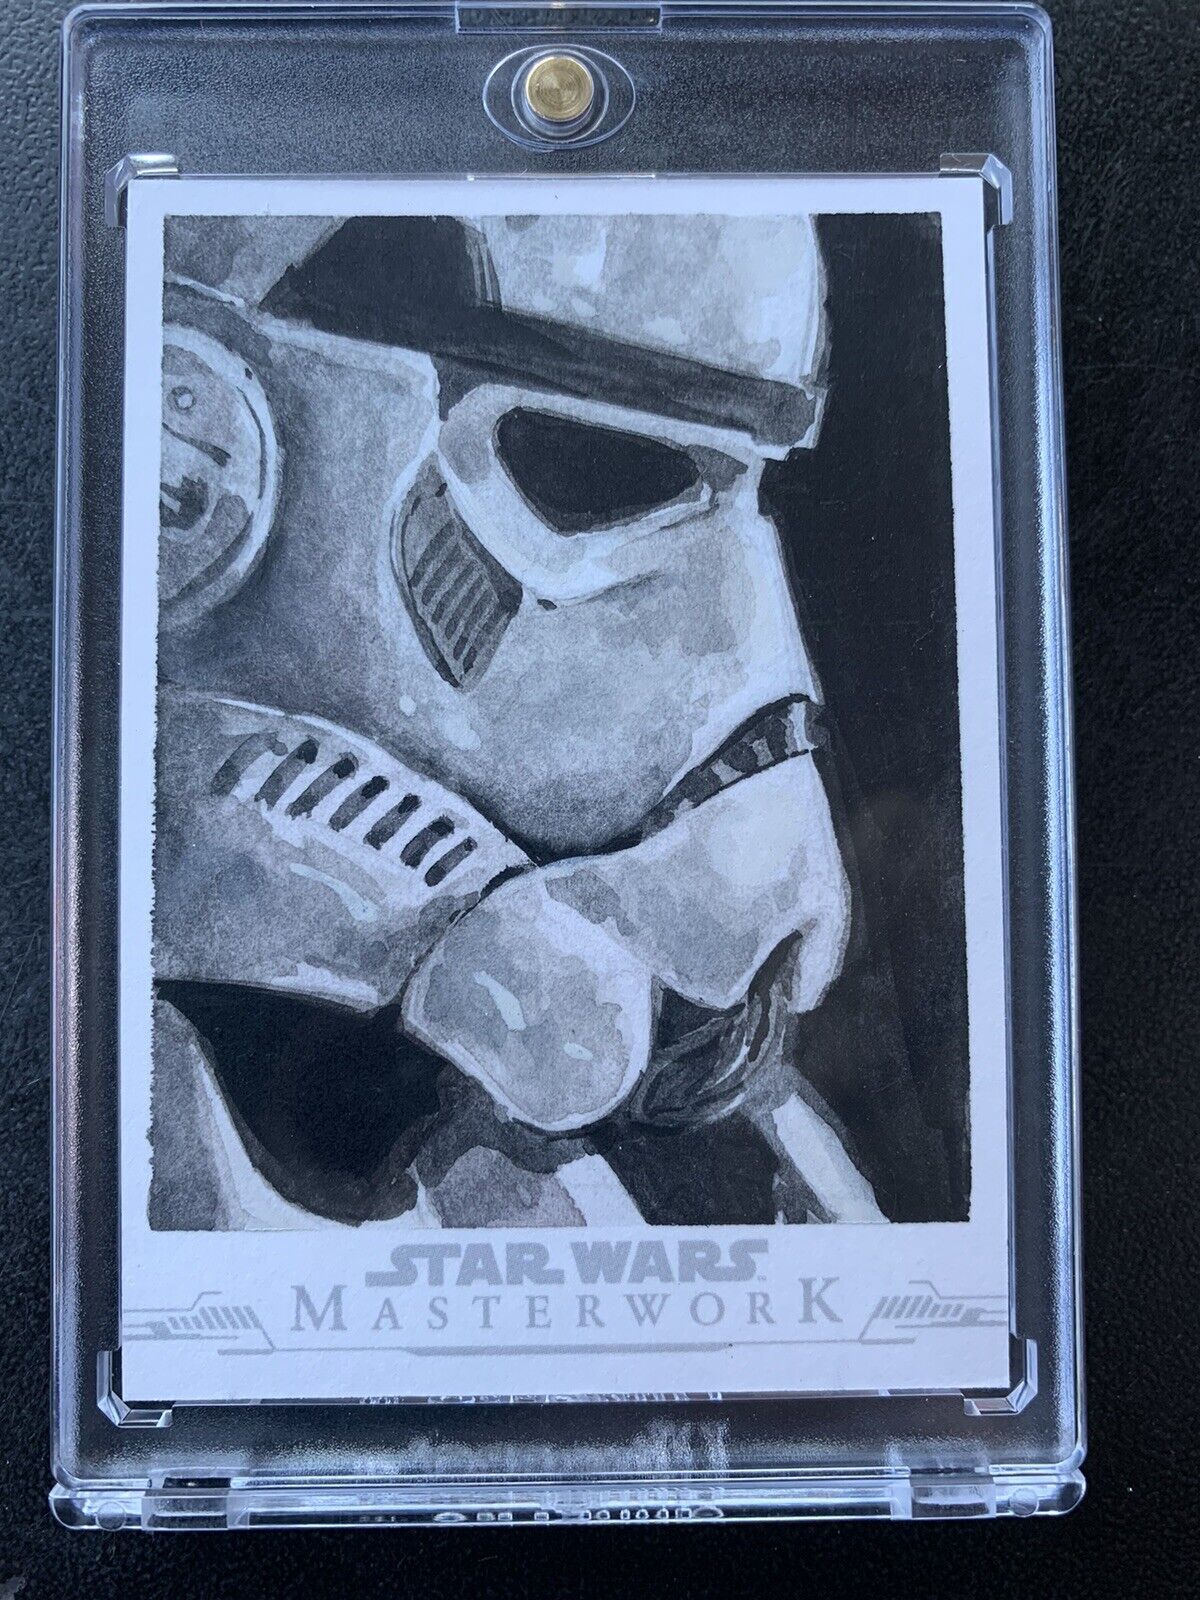 Rare 2019 Topps Star Wars Masterwork Sketch Cards 1/1 Jonathan Beistline Auto